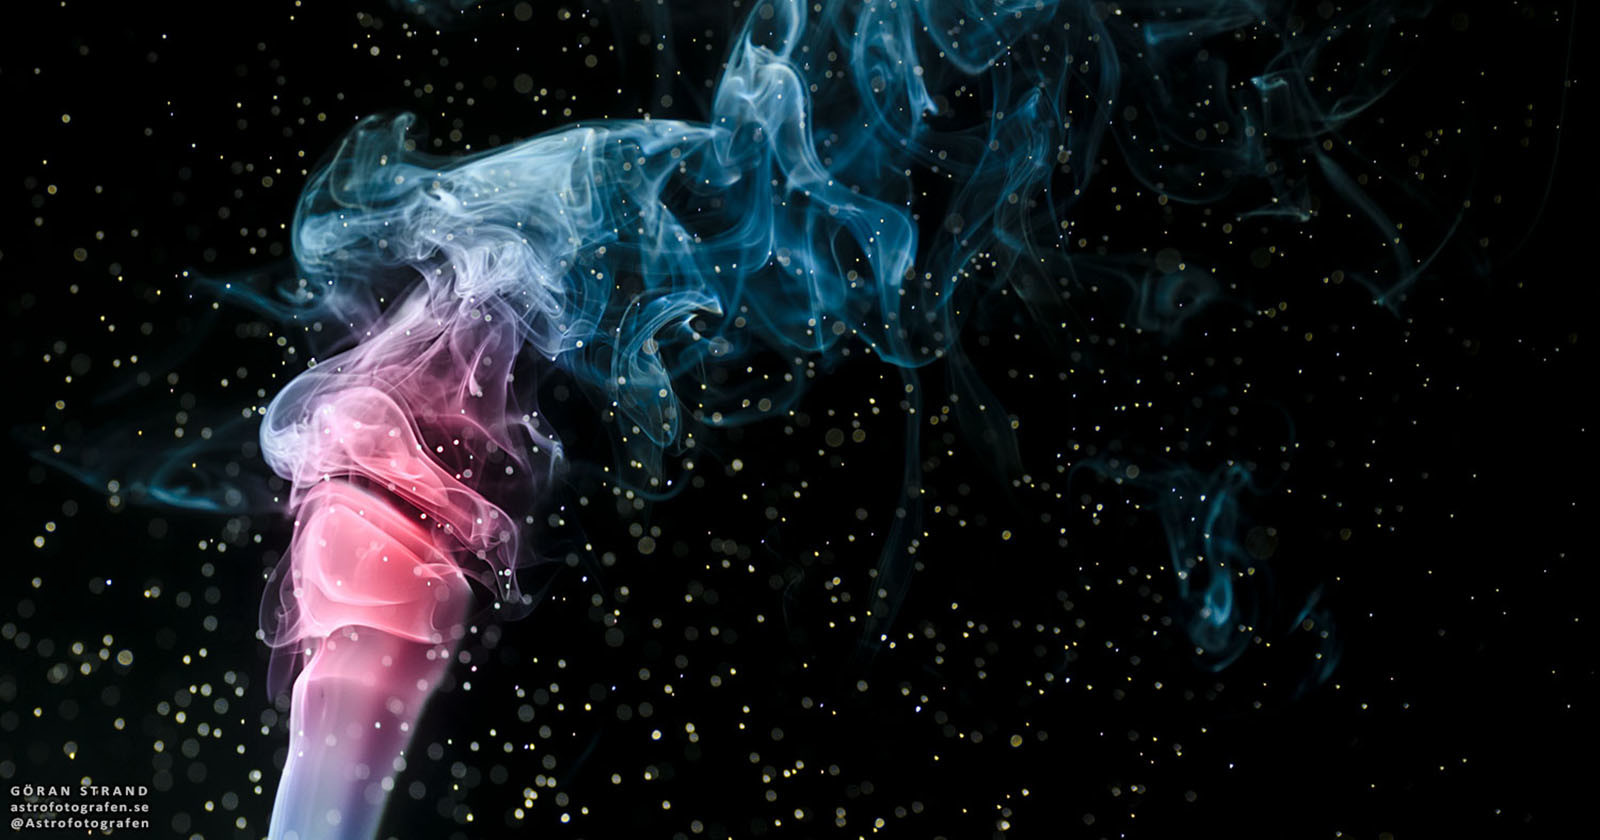 How to Shoot Space Nebula Smoke Photos at Home